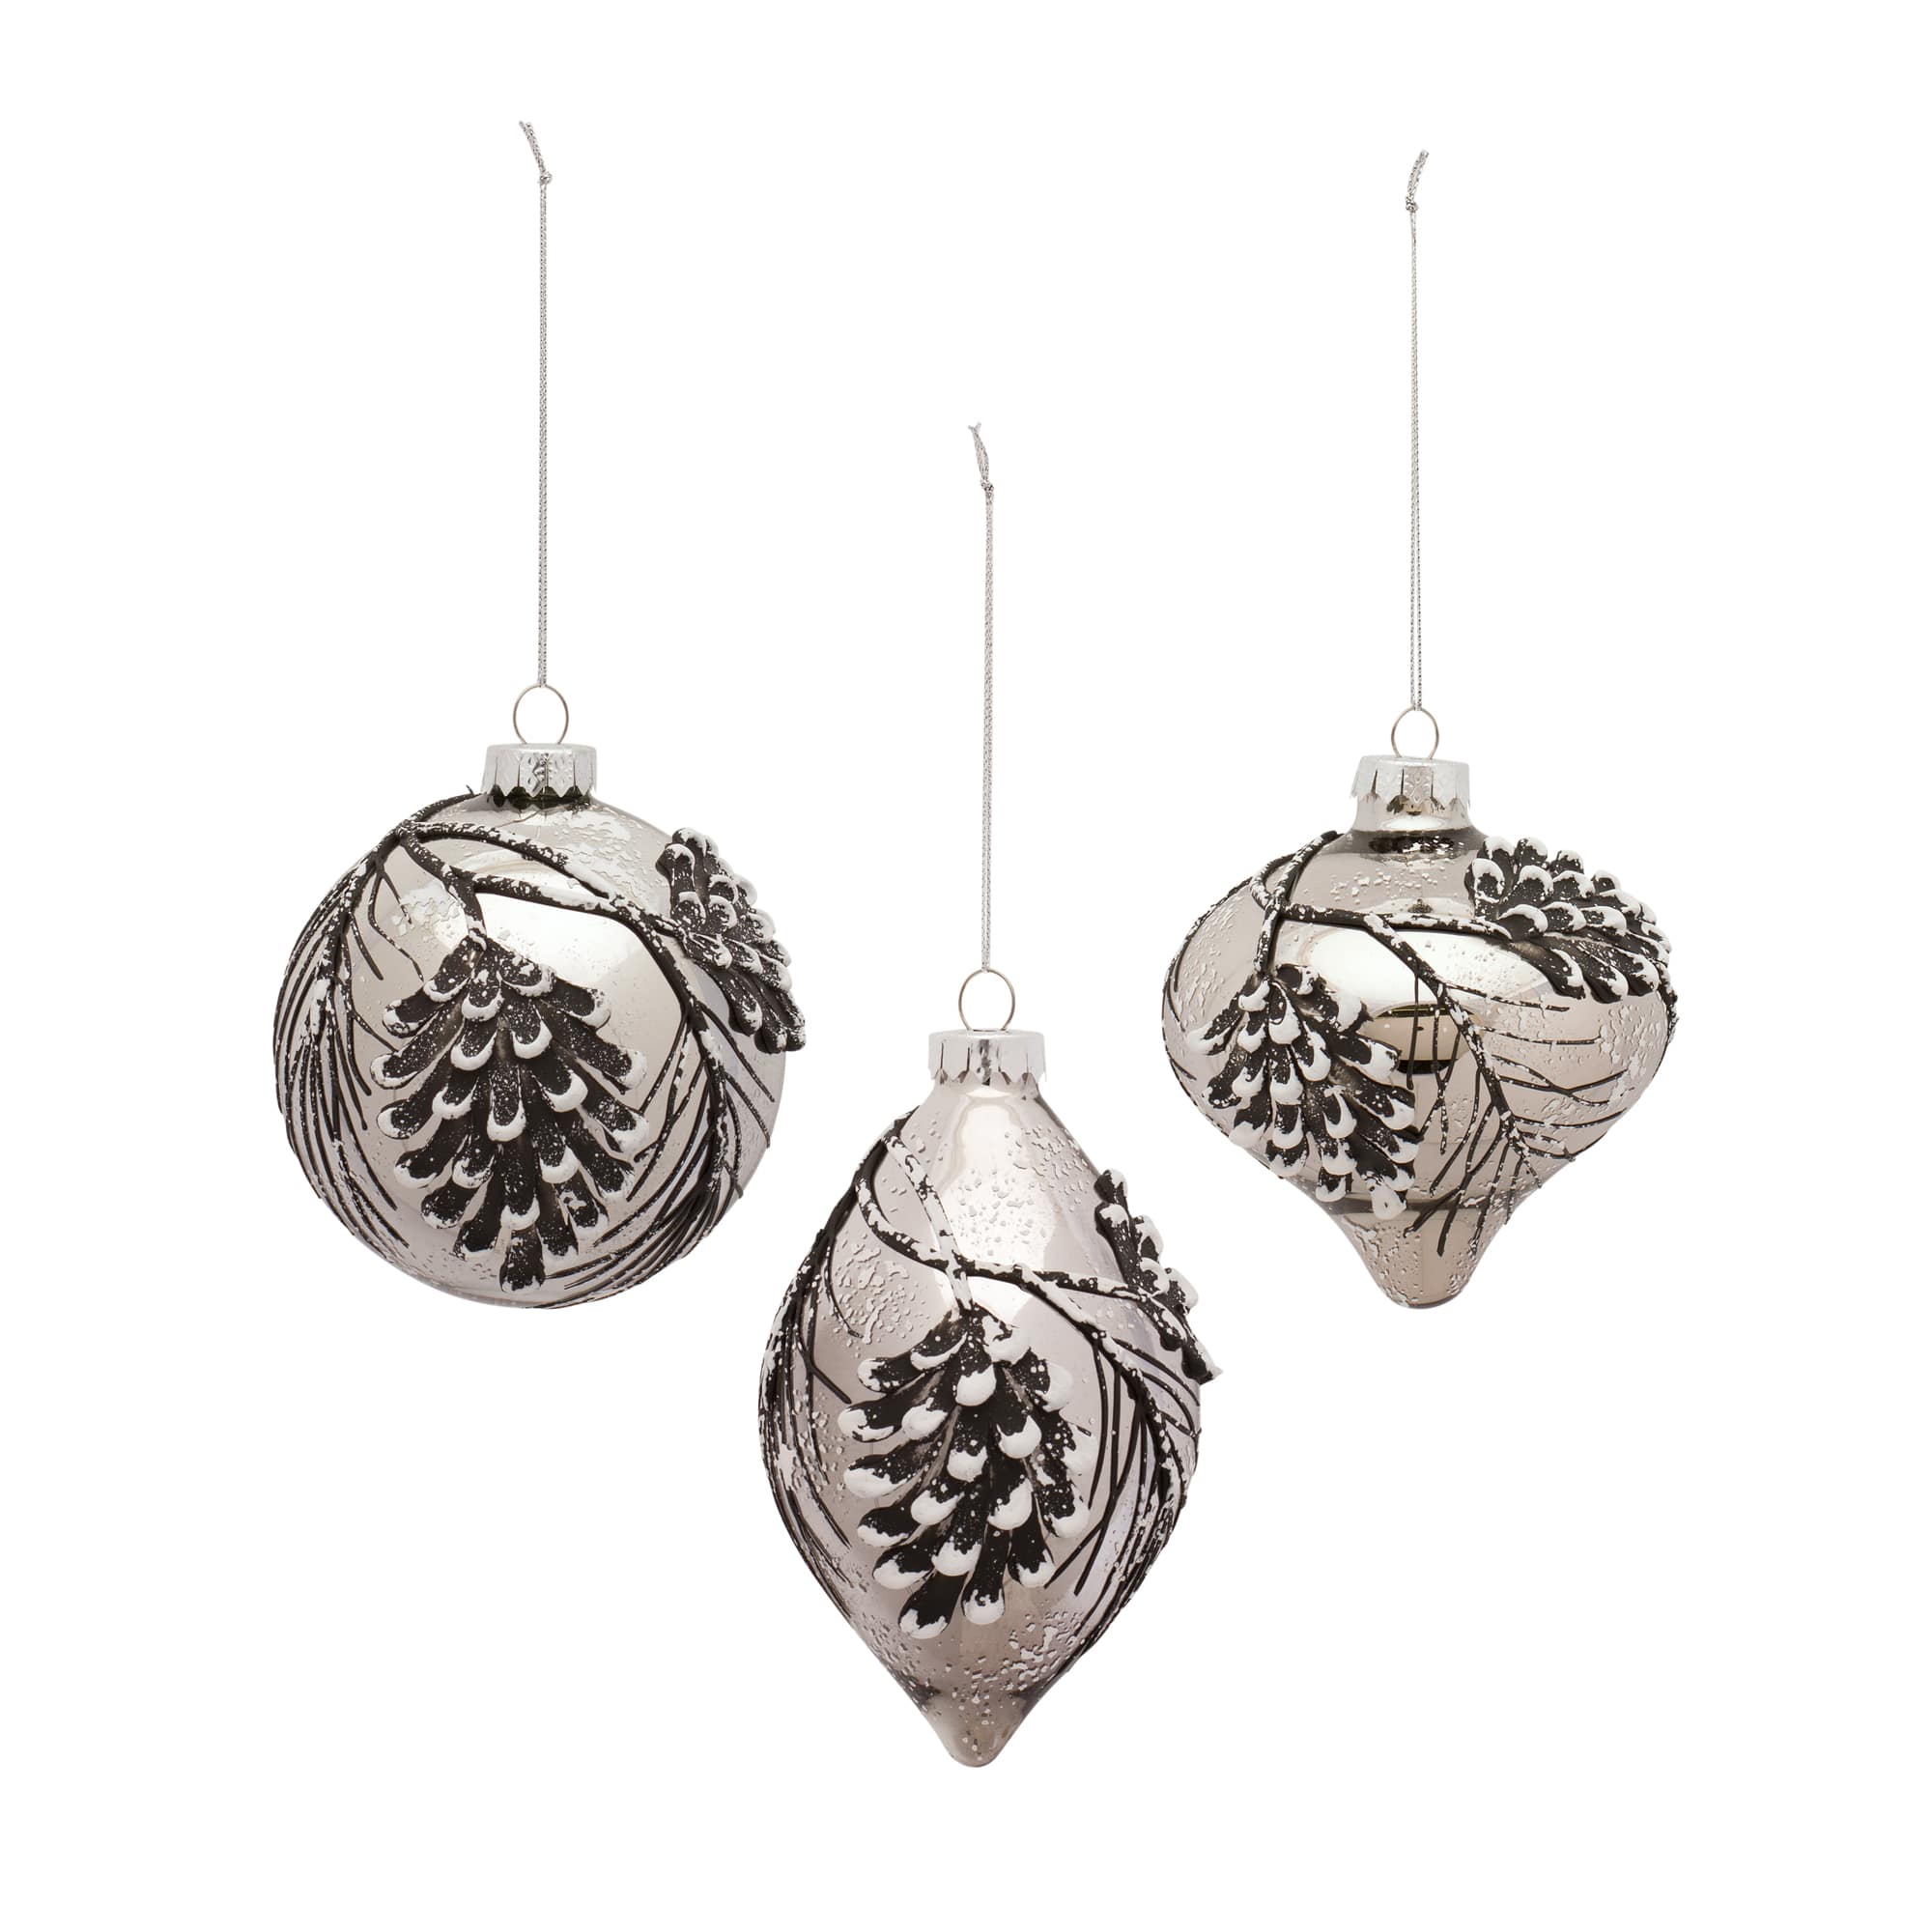 6ct. Silver Snowy Pinecone Ornament Set